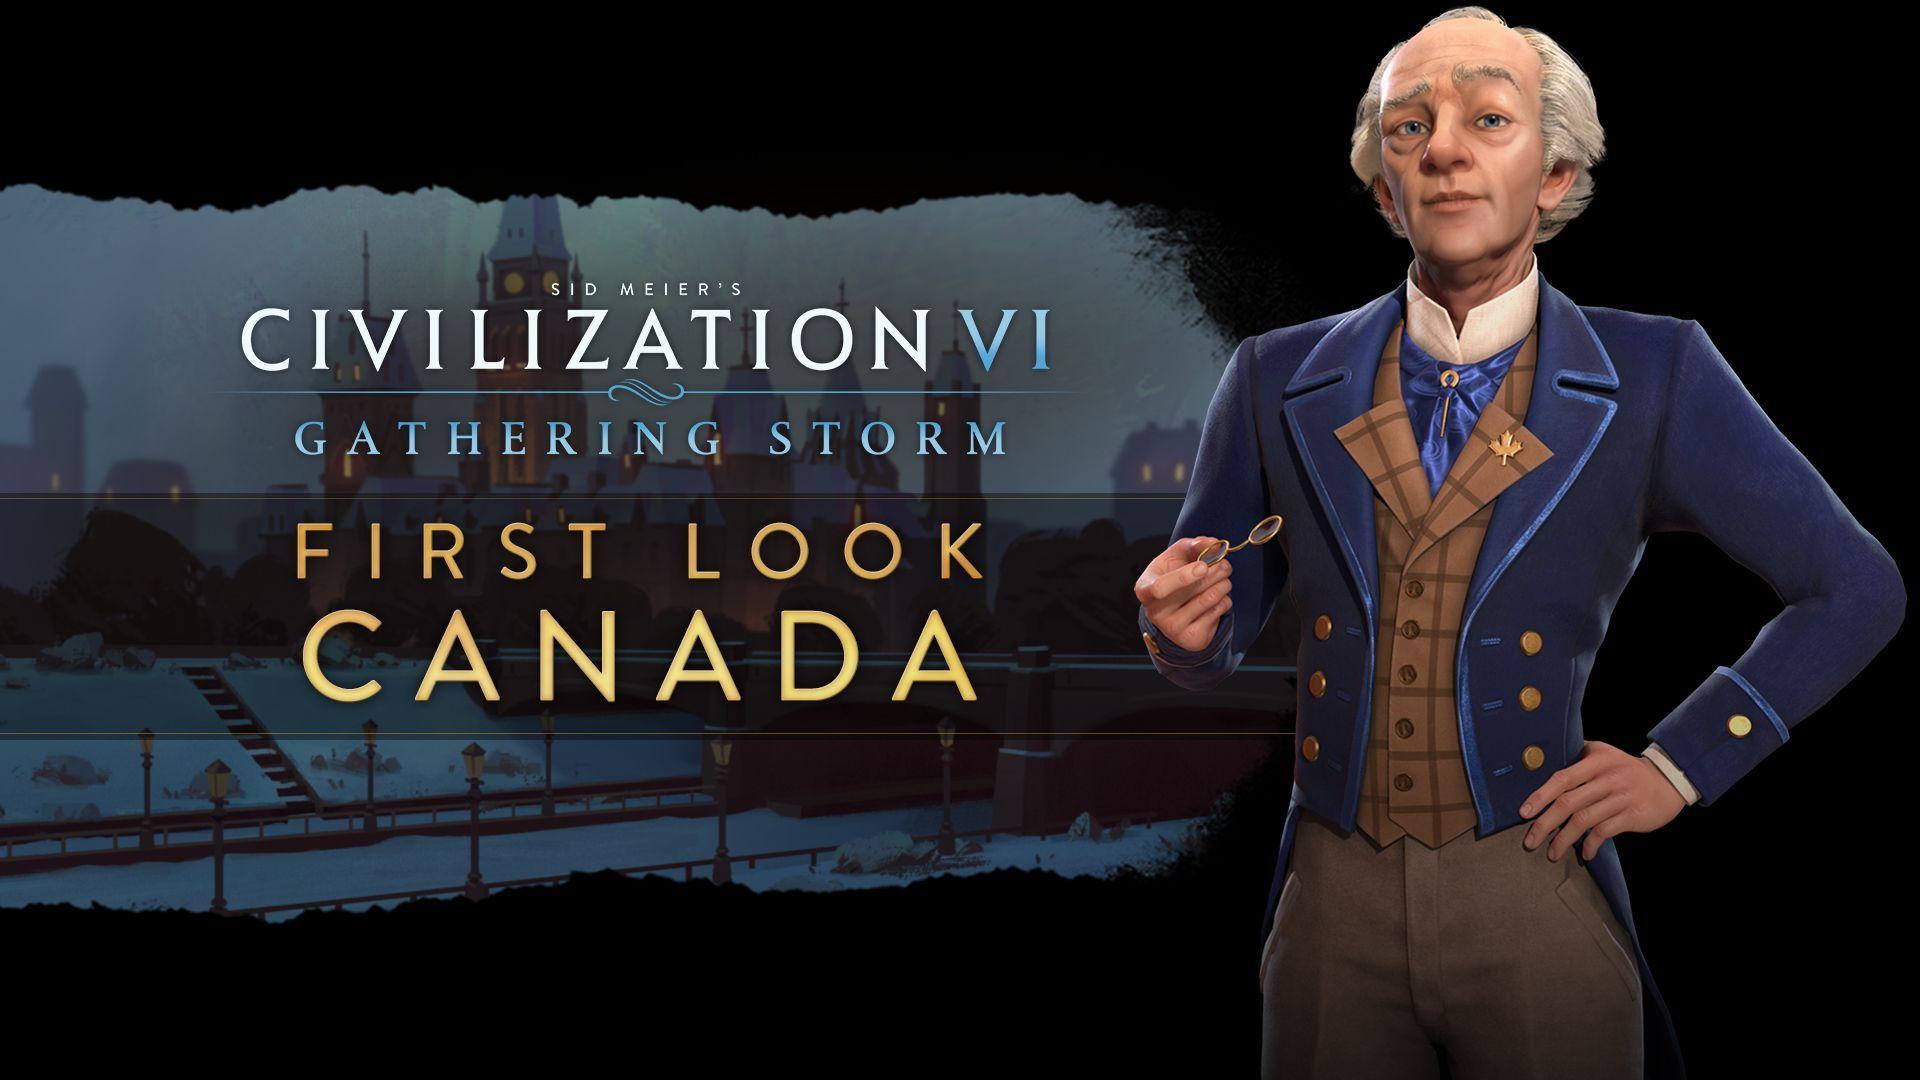 Civilization VI: Gathering Storm sees Wilfrid Laurier lead Canada